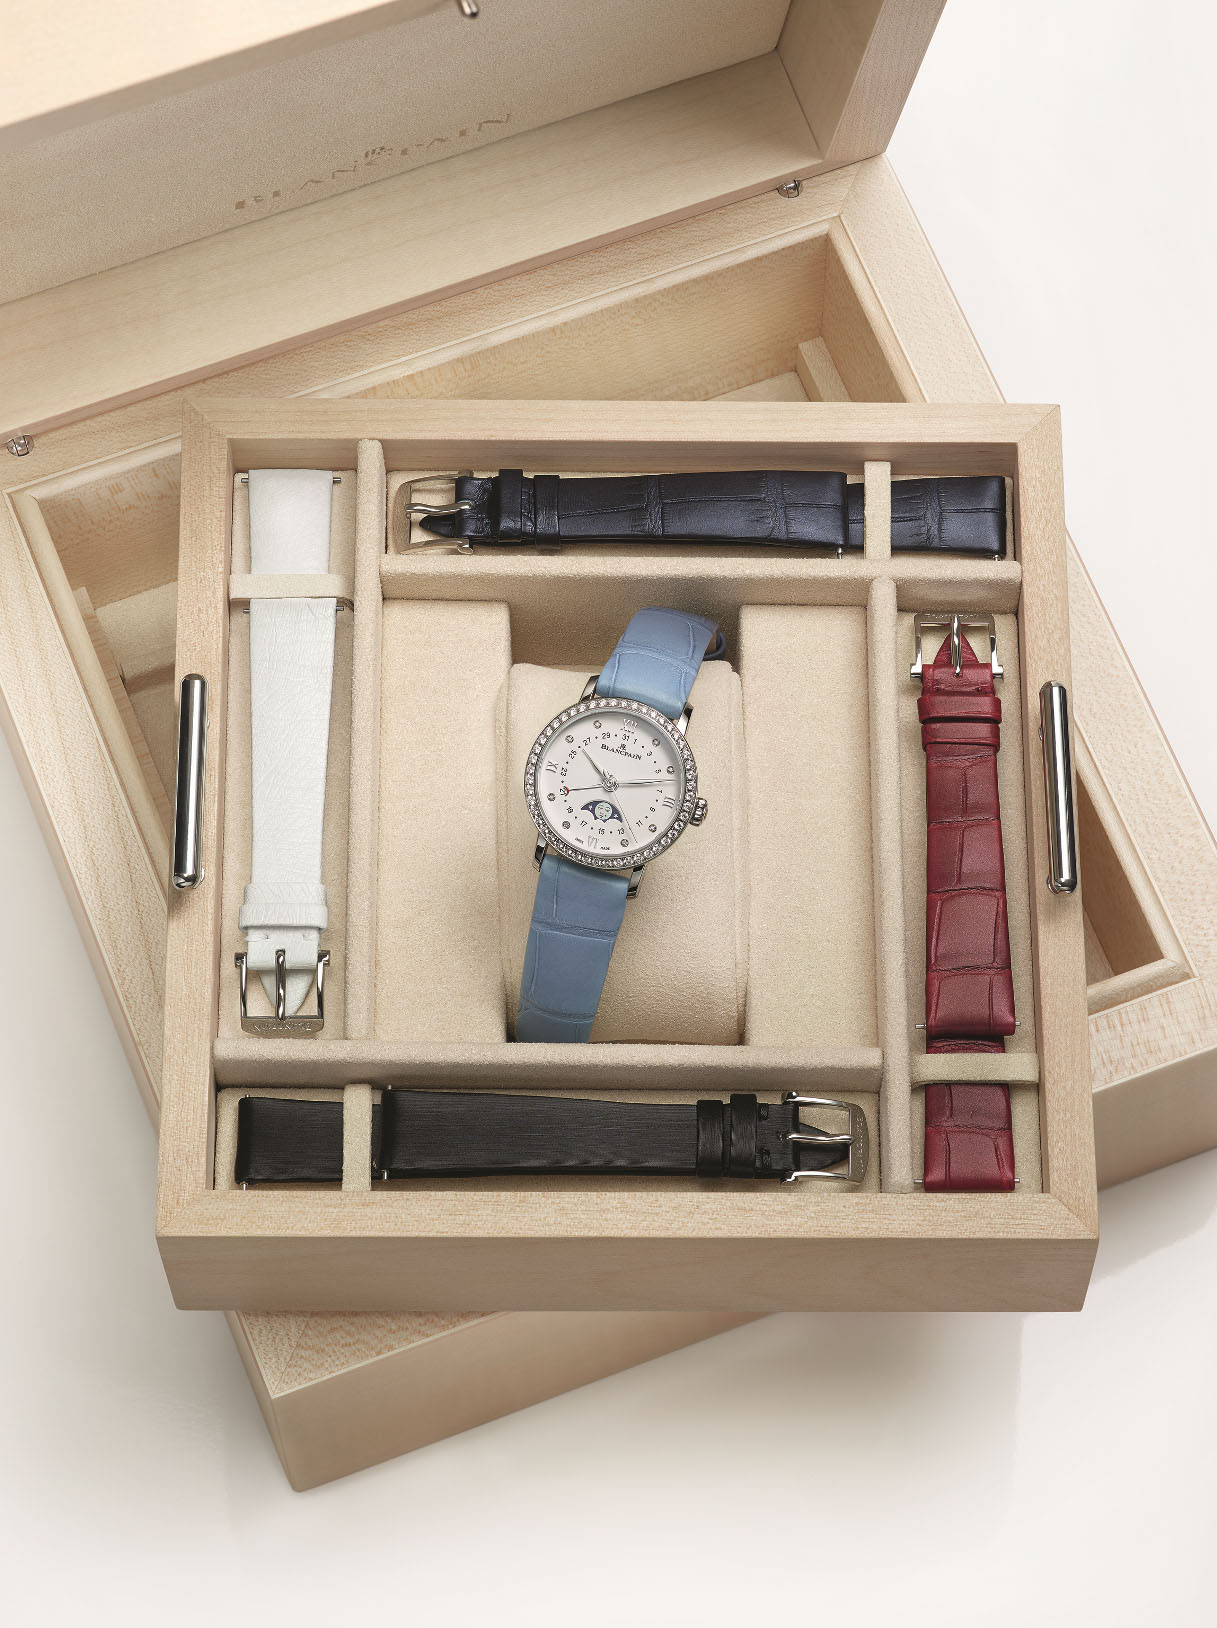 Blancpain Villeret - damski zegarek do wielu stylizacji | timeandwatches.pl